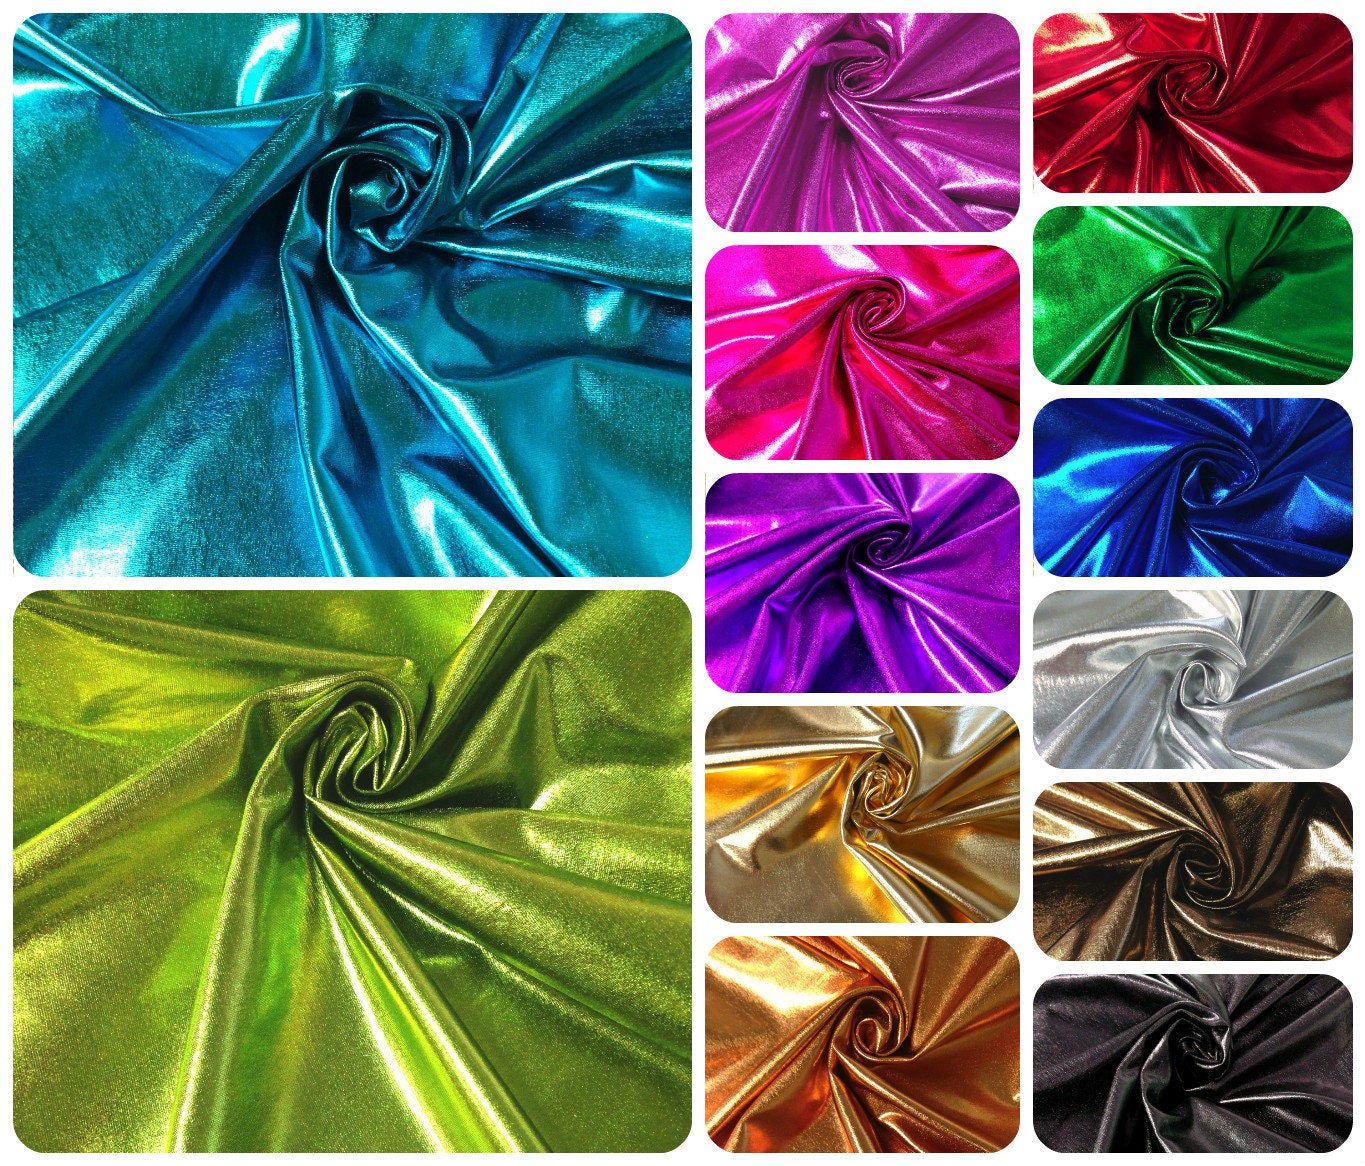 Blue Holographic/Shiny Nylon Spandex Mix Stretchy Fabric | Bow making, DIY,  Crafts, Clothing Waterproof Fabric | TheFabricDude 